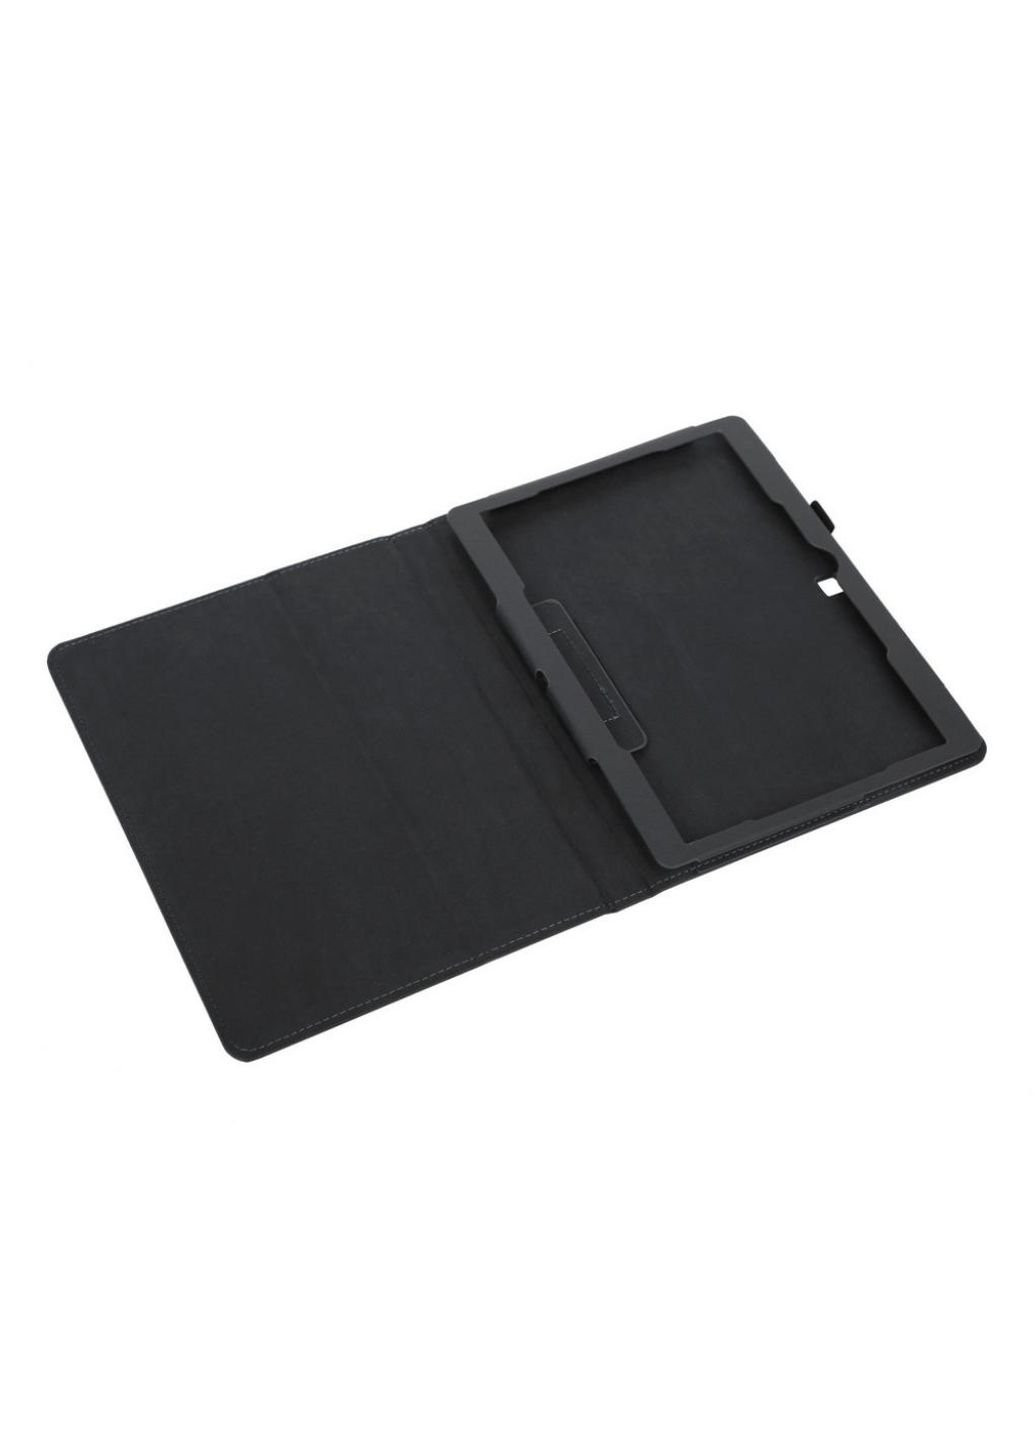 Чехол для планшета Slimbook для Prestigio Multipad Wize 3196 (PMT3196) Black (703654) BeCover (250199020)